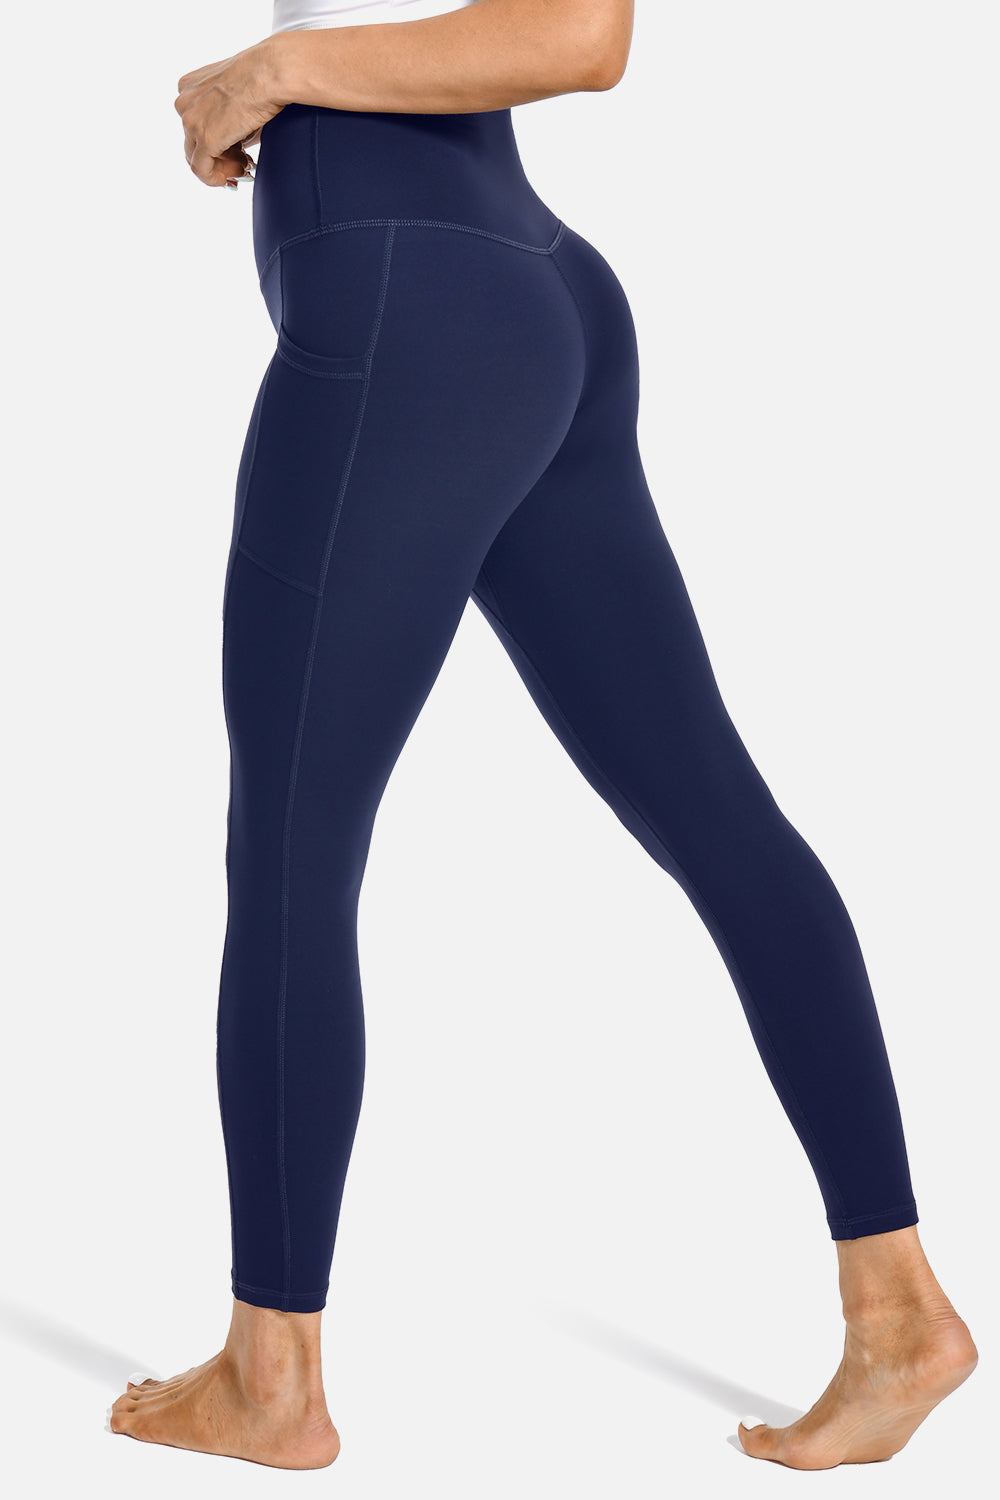 GetUSCart- Colorfulkoala Women's High Waisted Pattern Leggings Full-Length  Yoga Pants (XL, Deep Grey Camo)